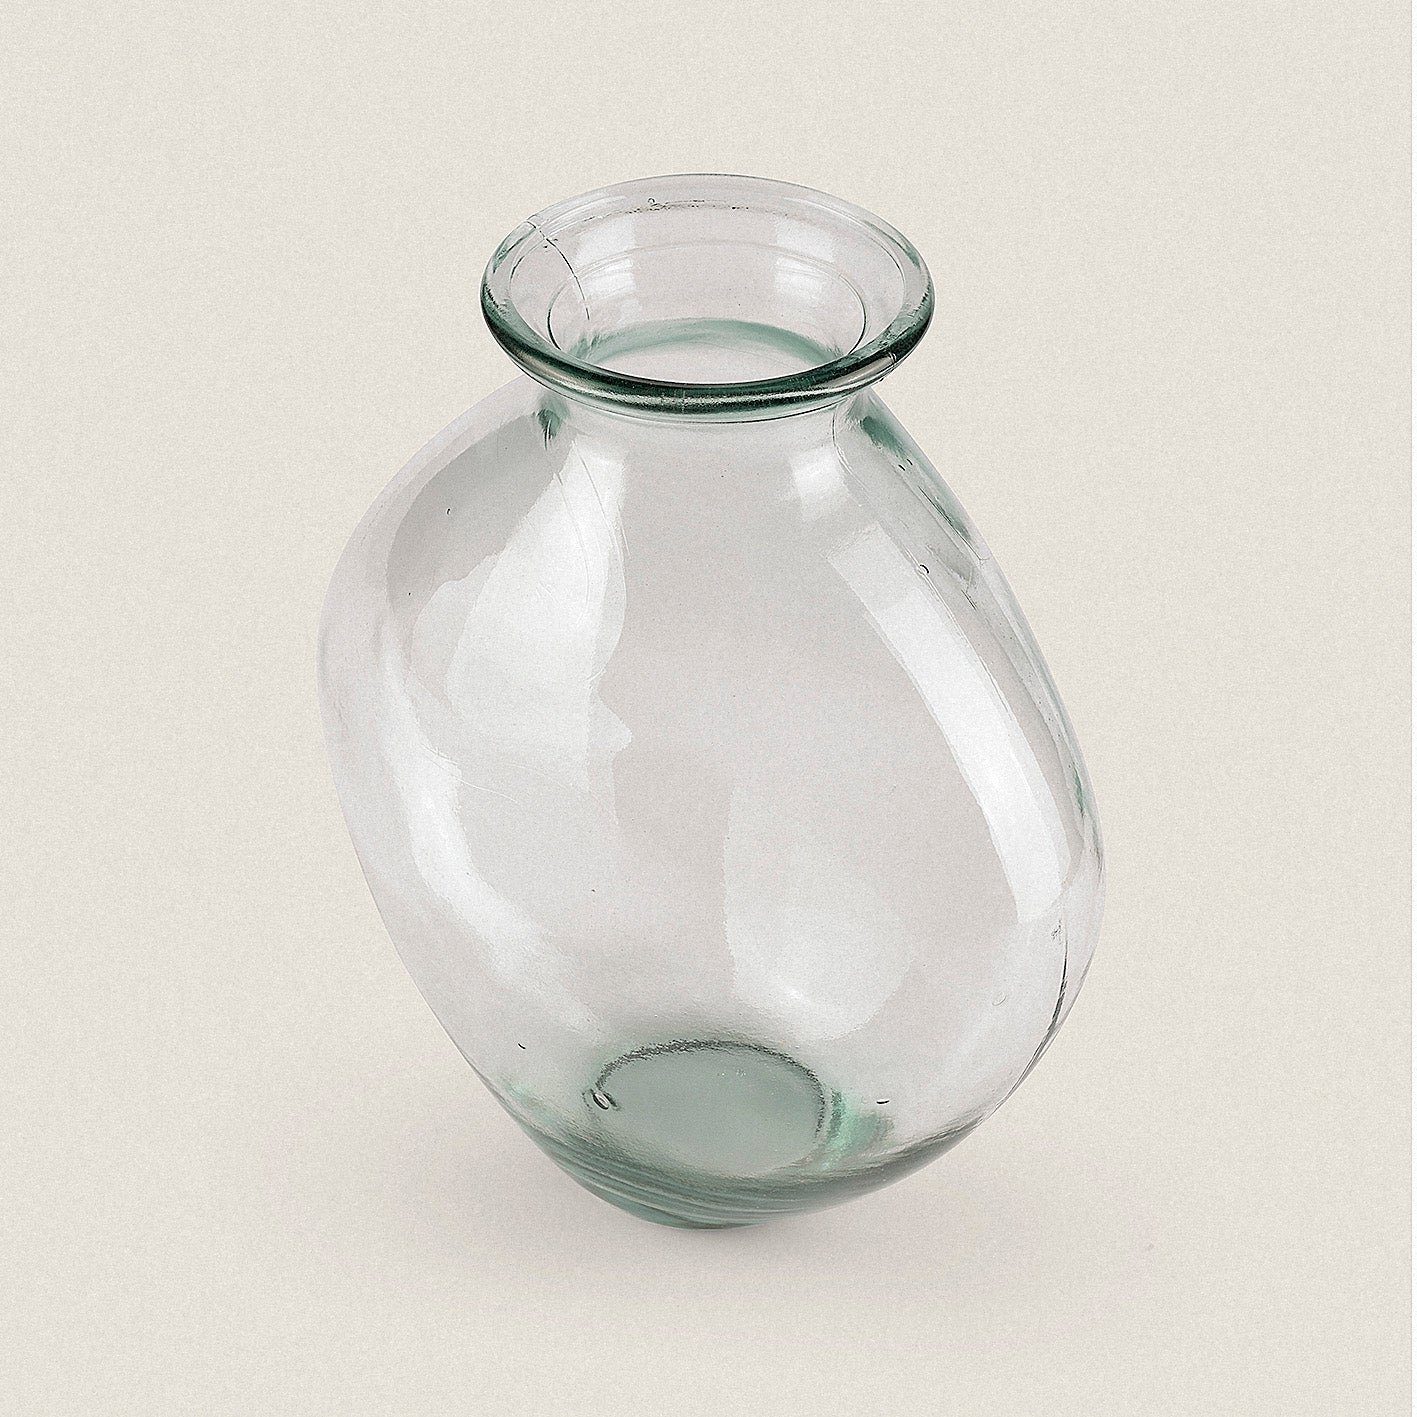 "Maria", Altglas the % up Tischvase Vase way 100